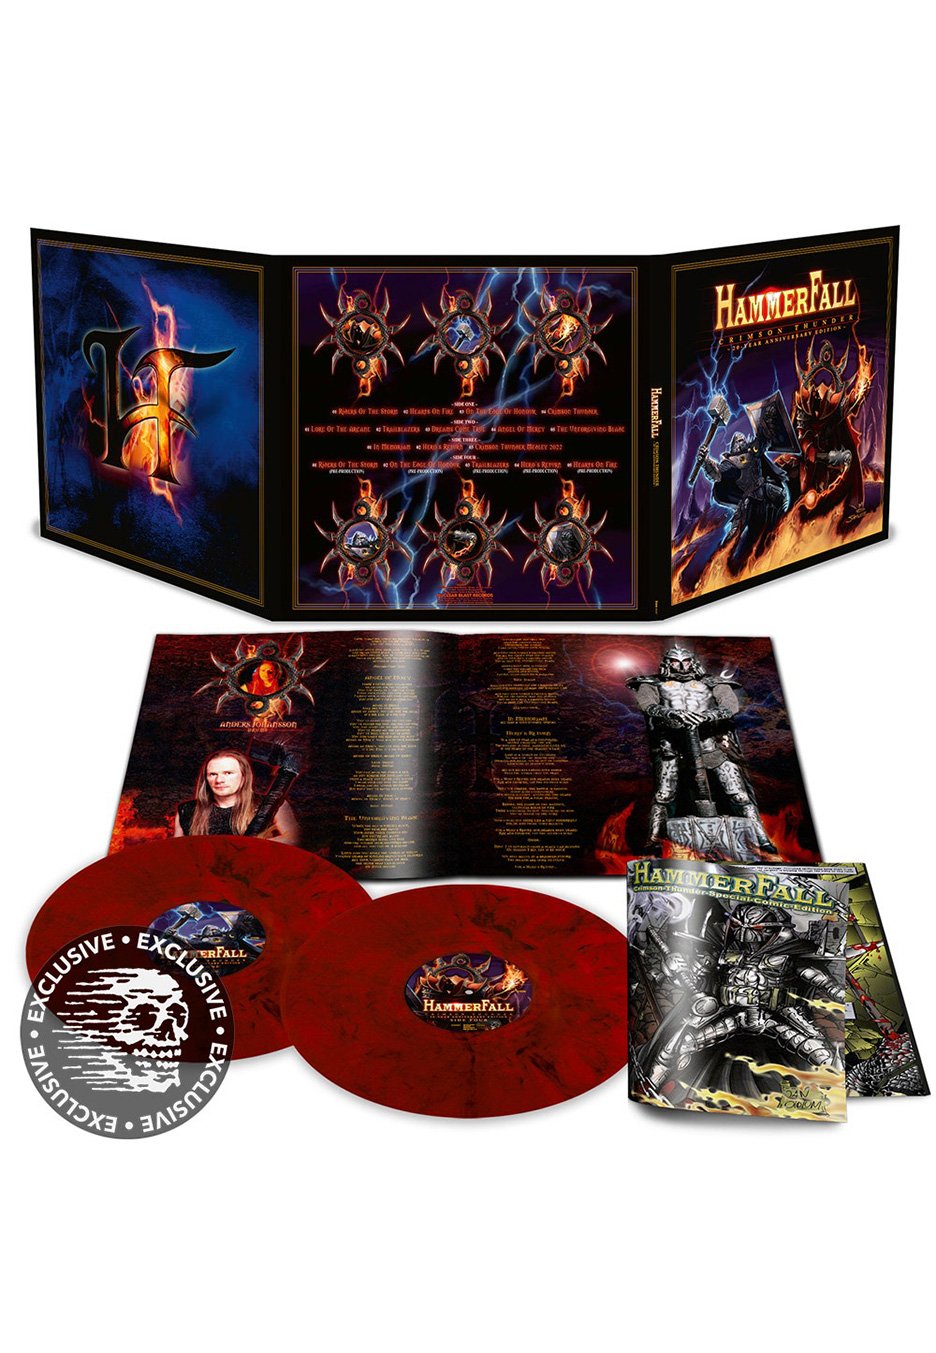 Hammerfall - Crimson Thunder - 20 Year Anniversary Red/Black - Marbled 2 Vinyl